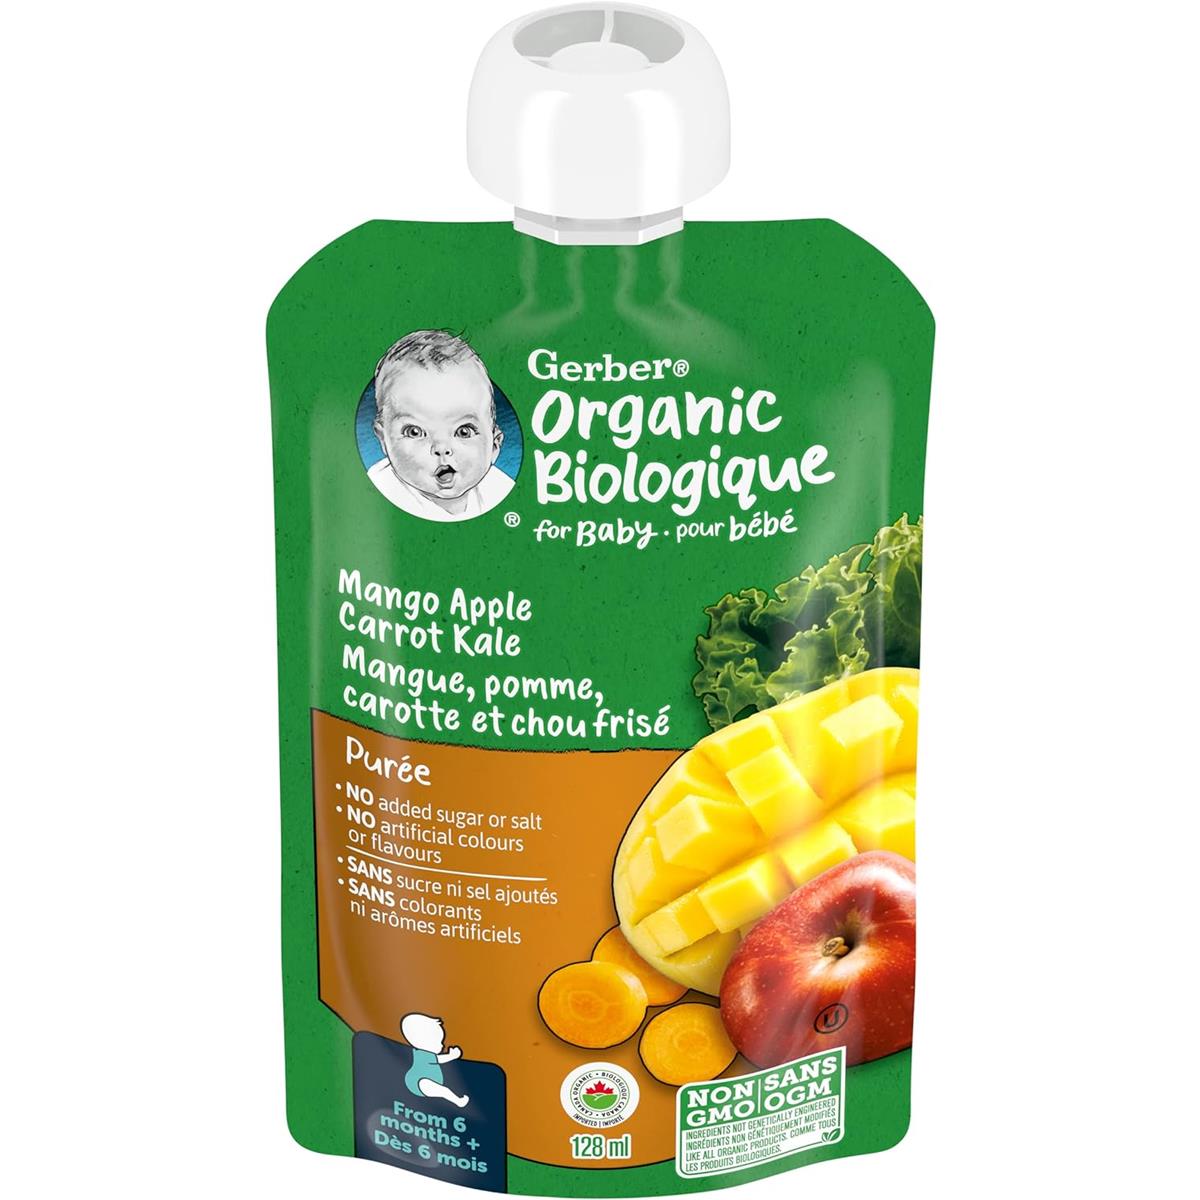 Gerber Organic Biologique for Baby, 2nd Foods for Sitter, 128ml - Mango Apple Carrot Kale